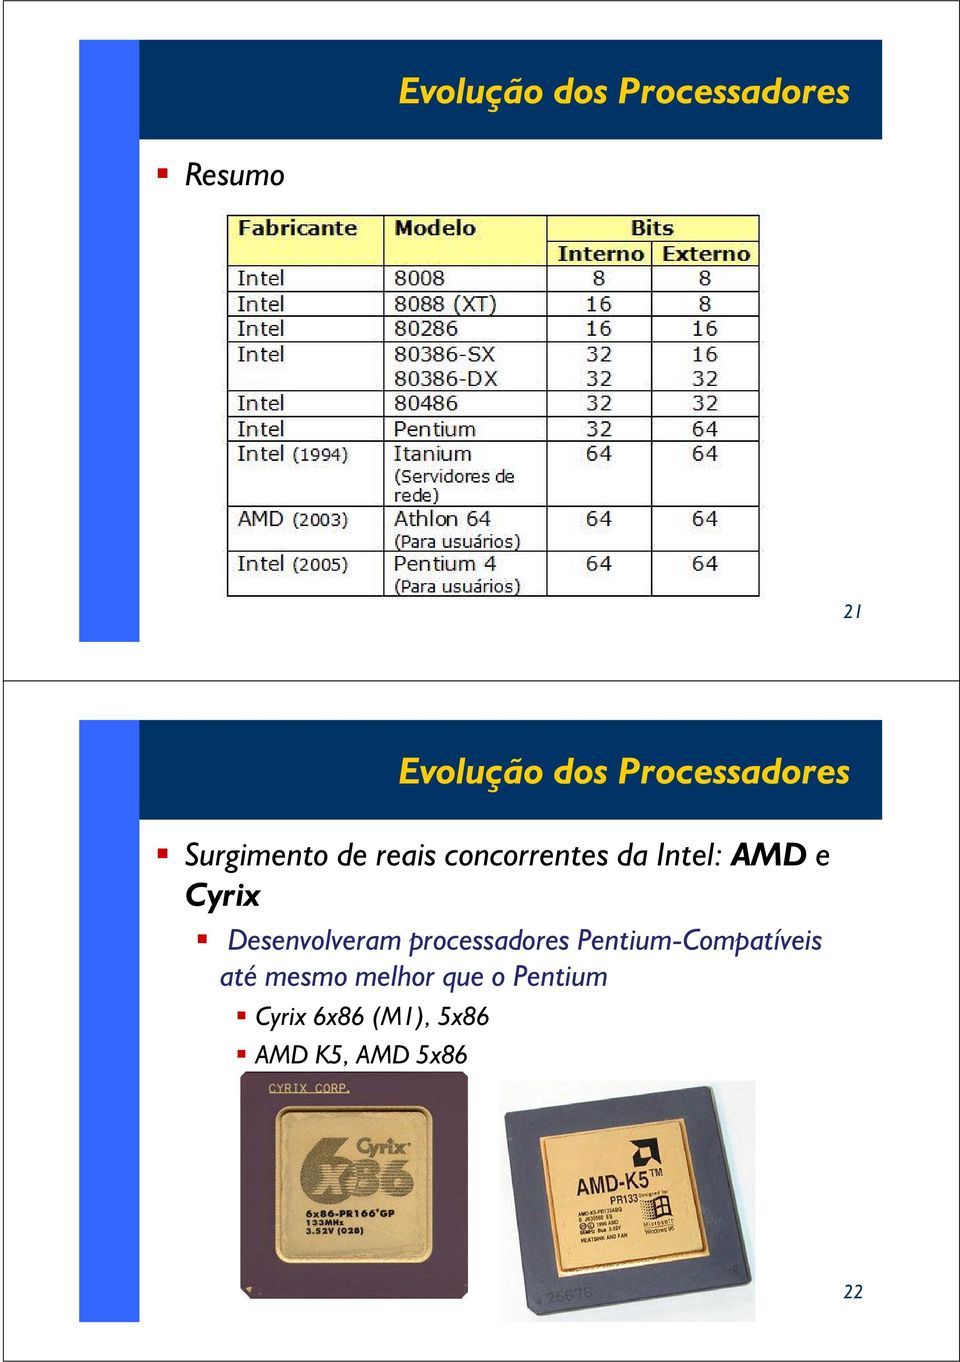 AMD e Cyrix Desenvolveram processadores